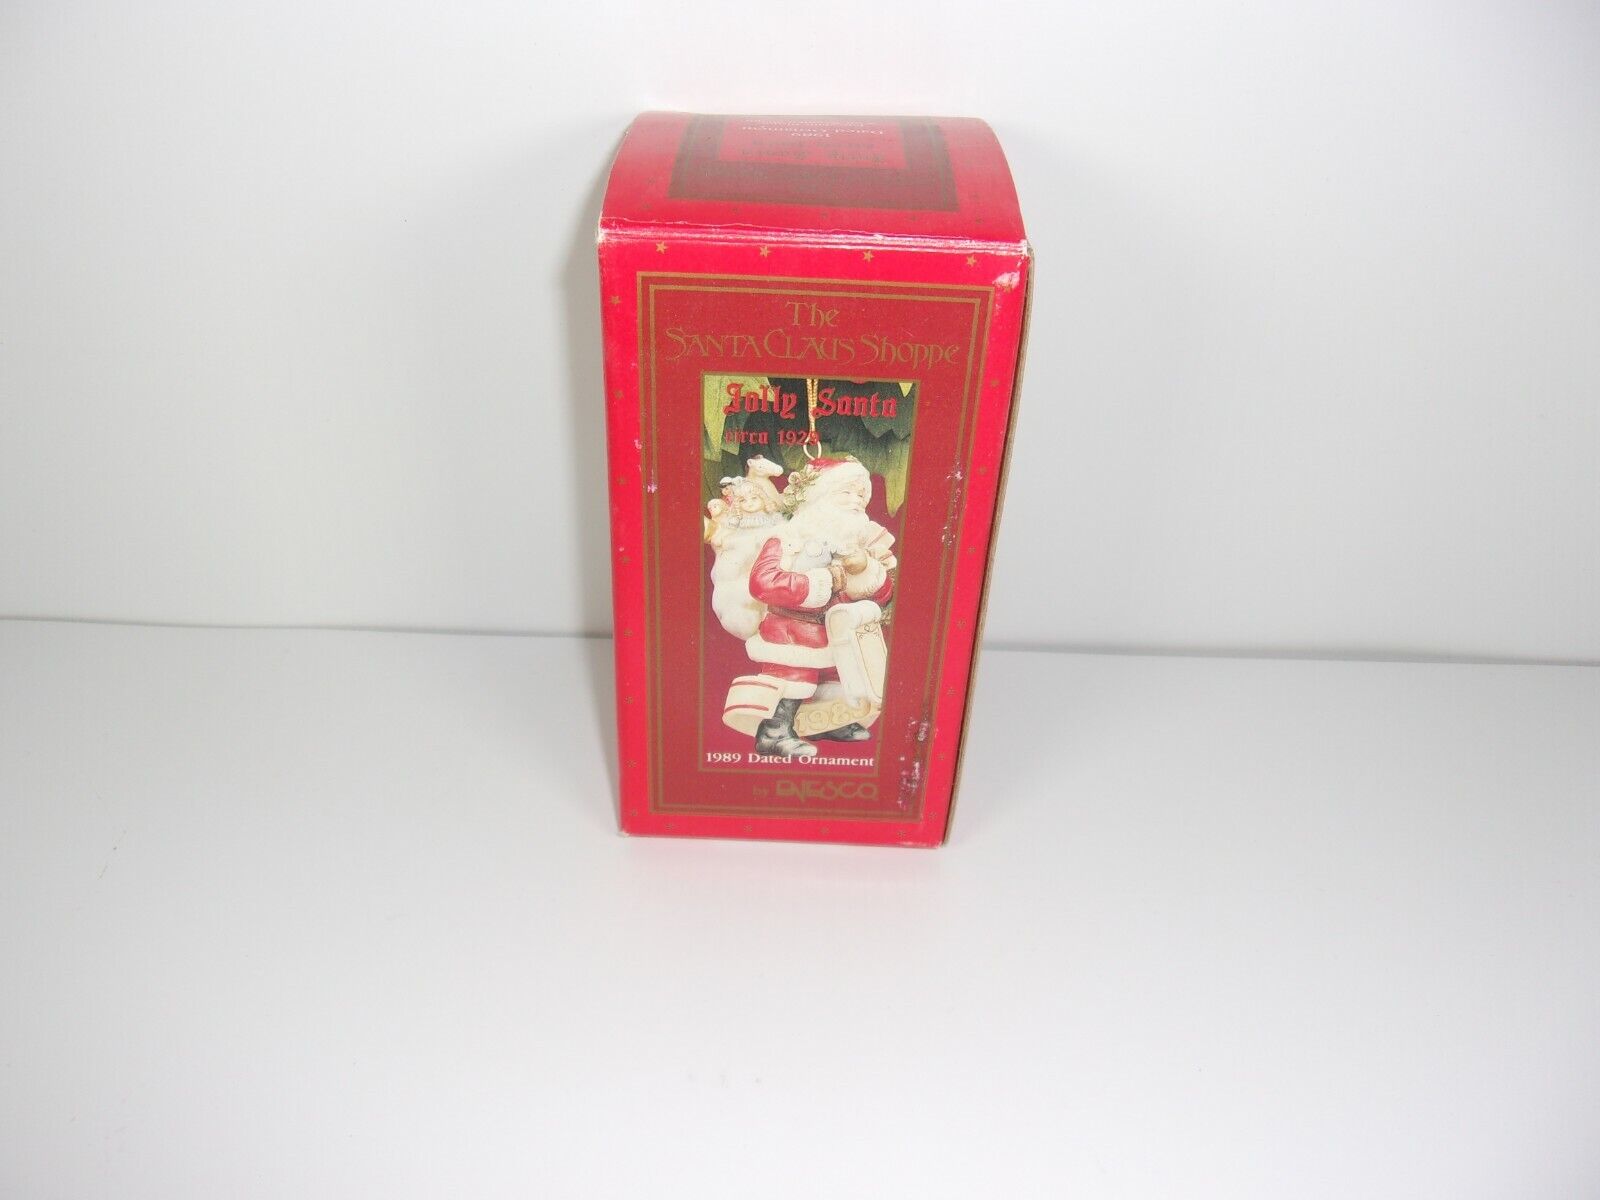 Enesco 1989 dated ornament Jolly Santa Circa 1929 new in box